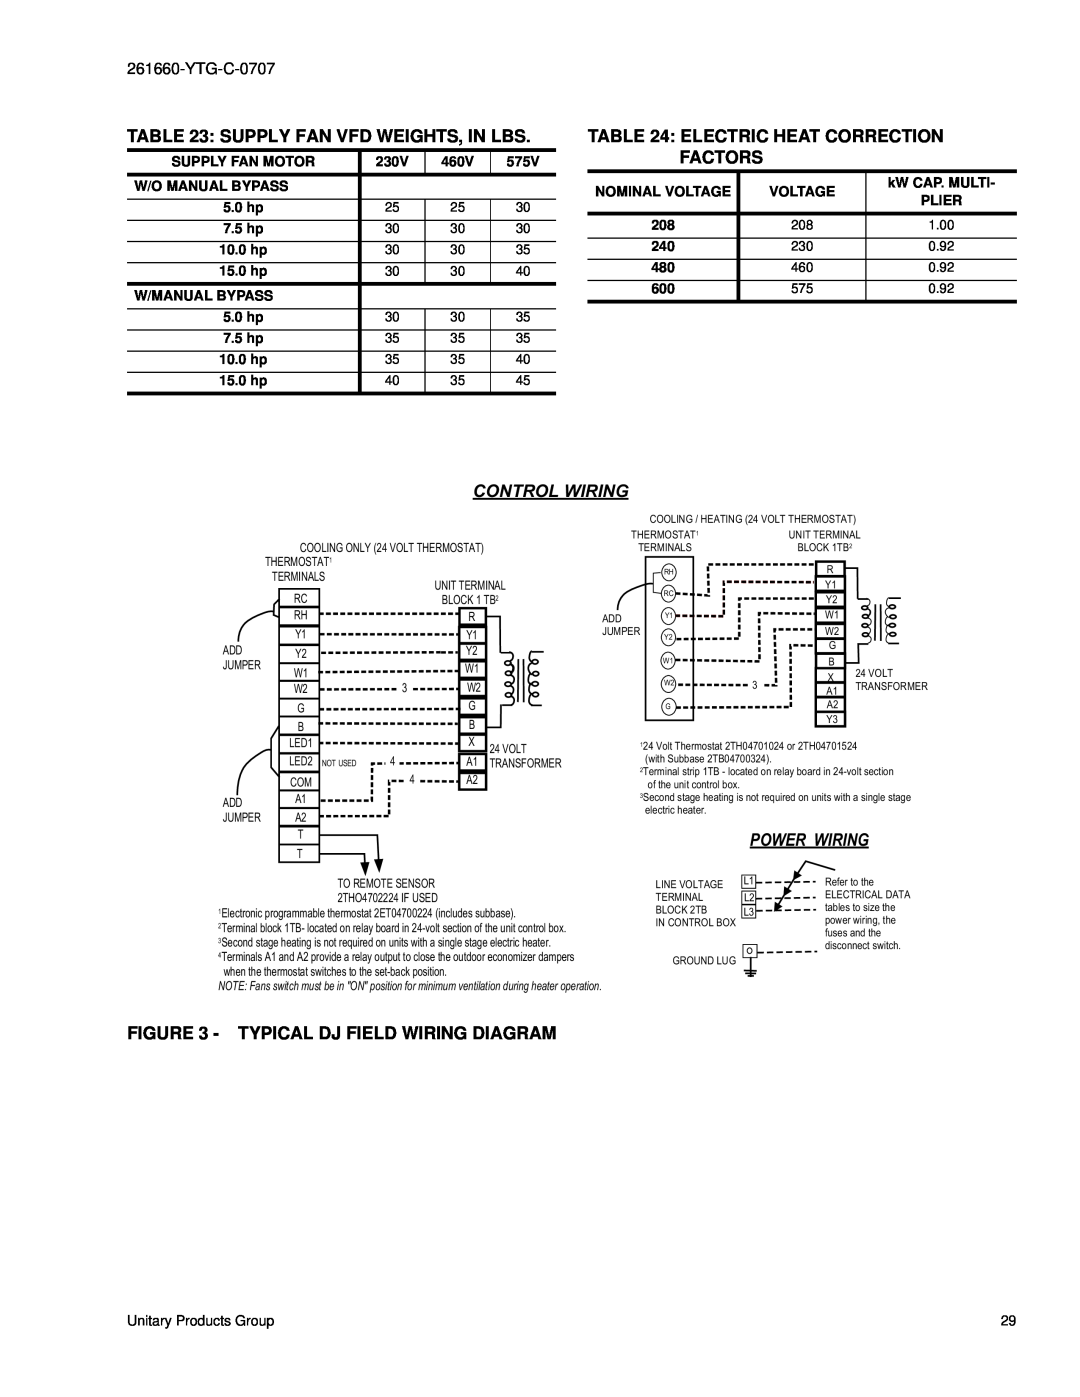 York DJ 180 warranty Supply Fan Vfd Weights, In Lbs, Electric Heat Correction Factors, Typical Dj Field Wiring Diagram 